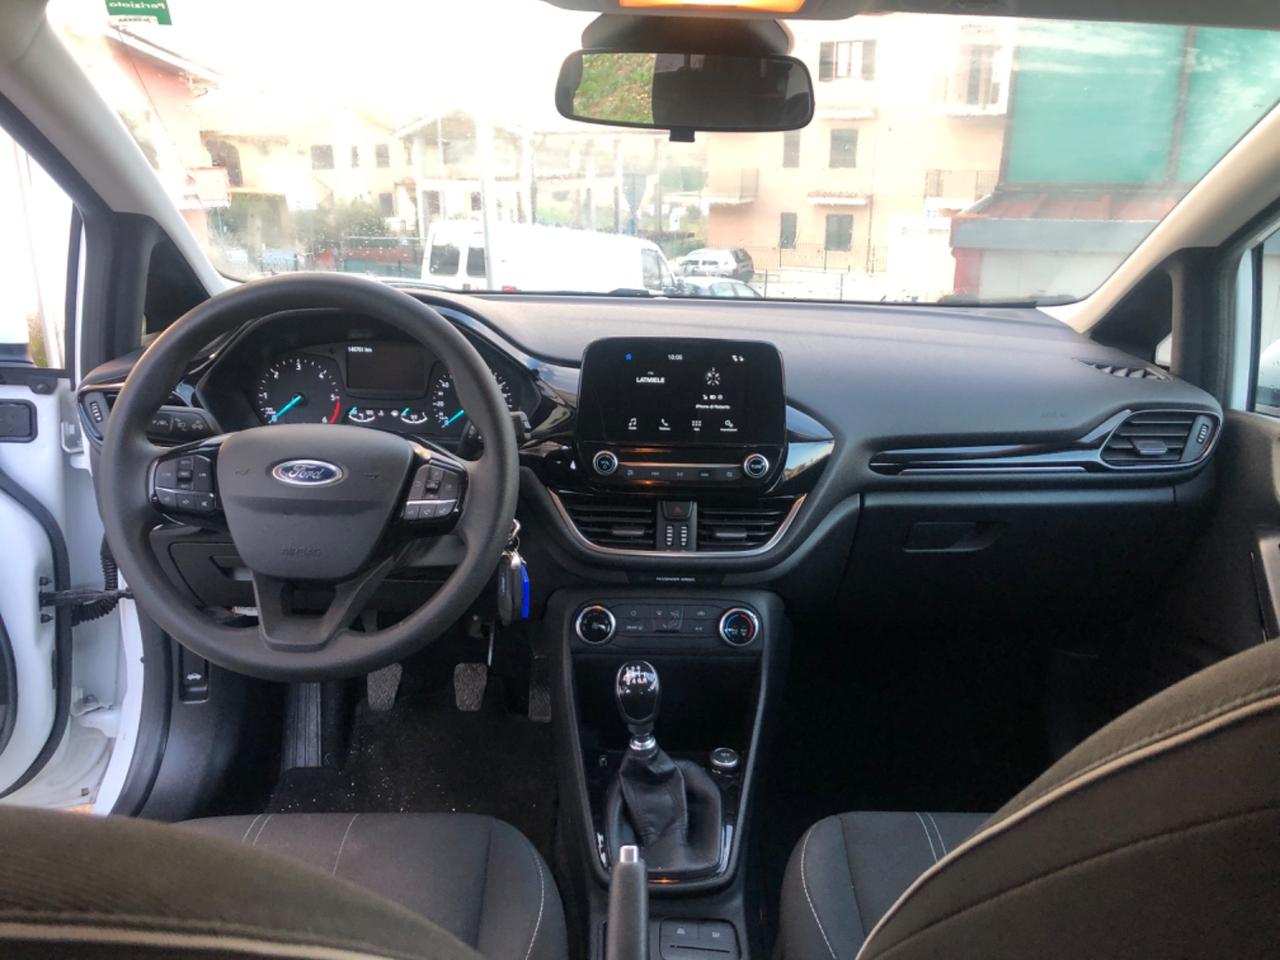 Ford Fiesta 1.5 dci